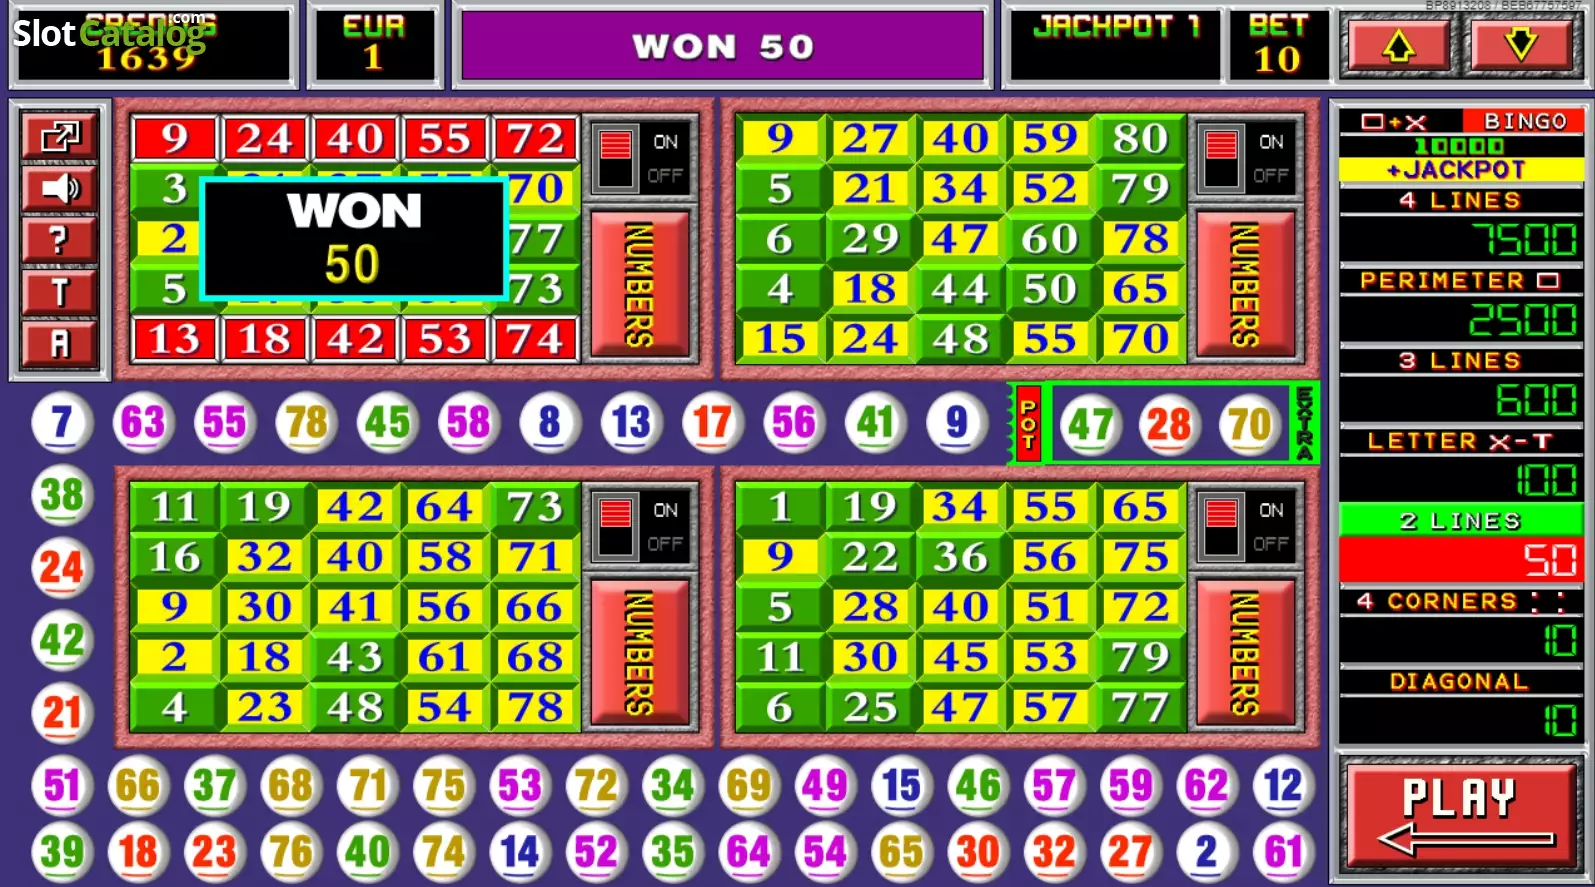 Jogue Grátis Champion Bingo II